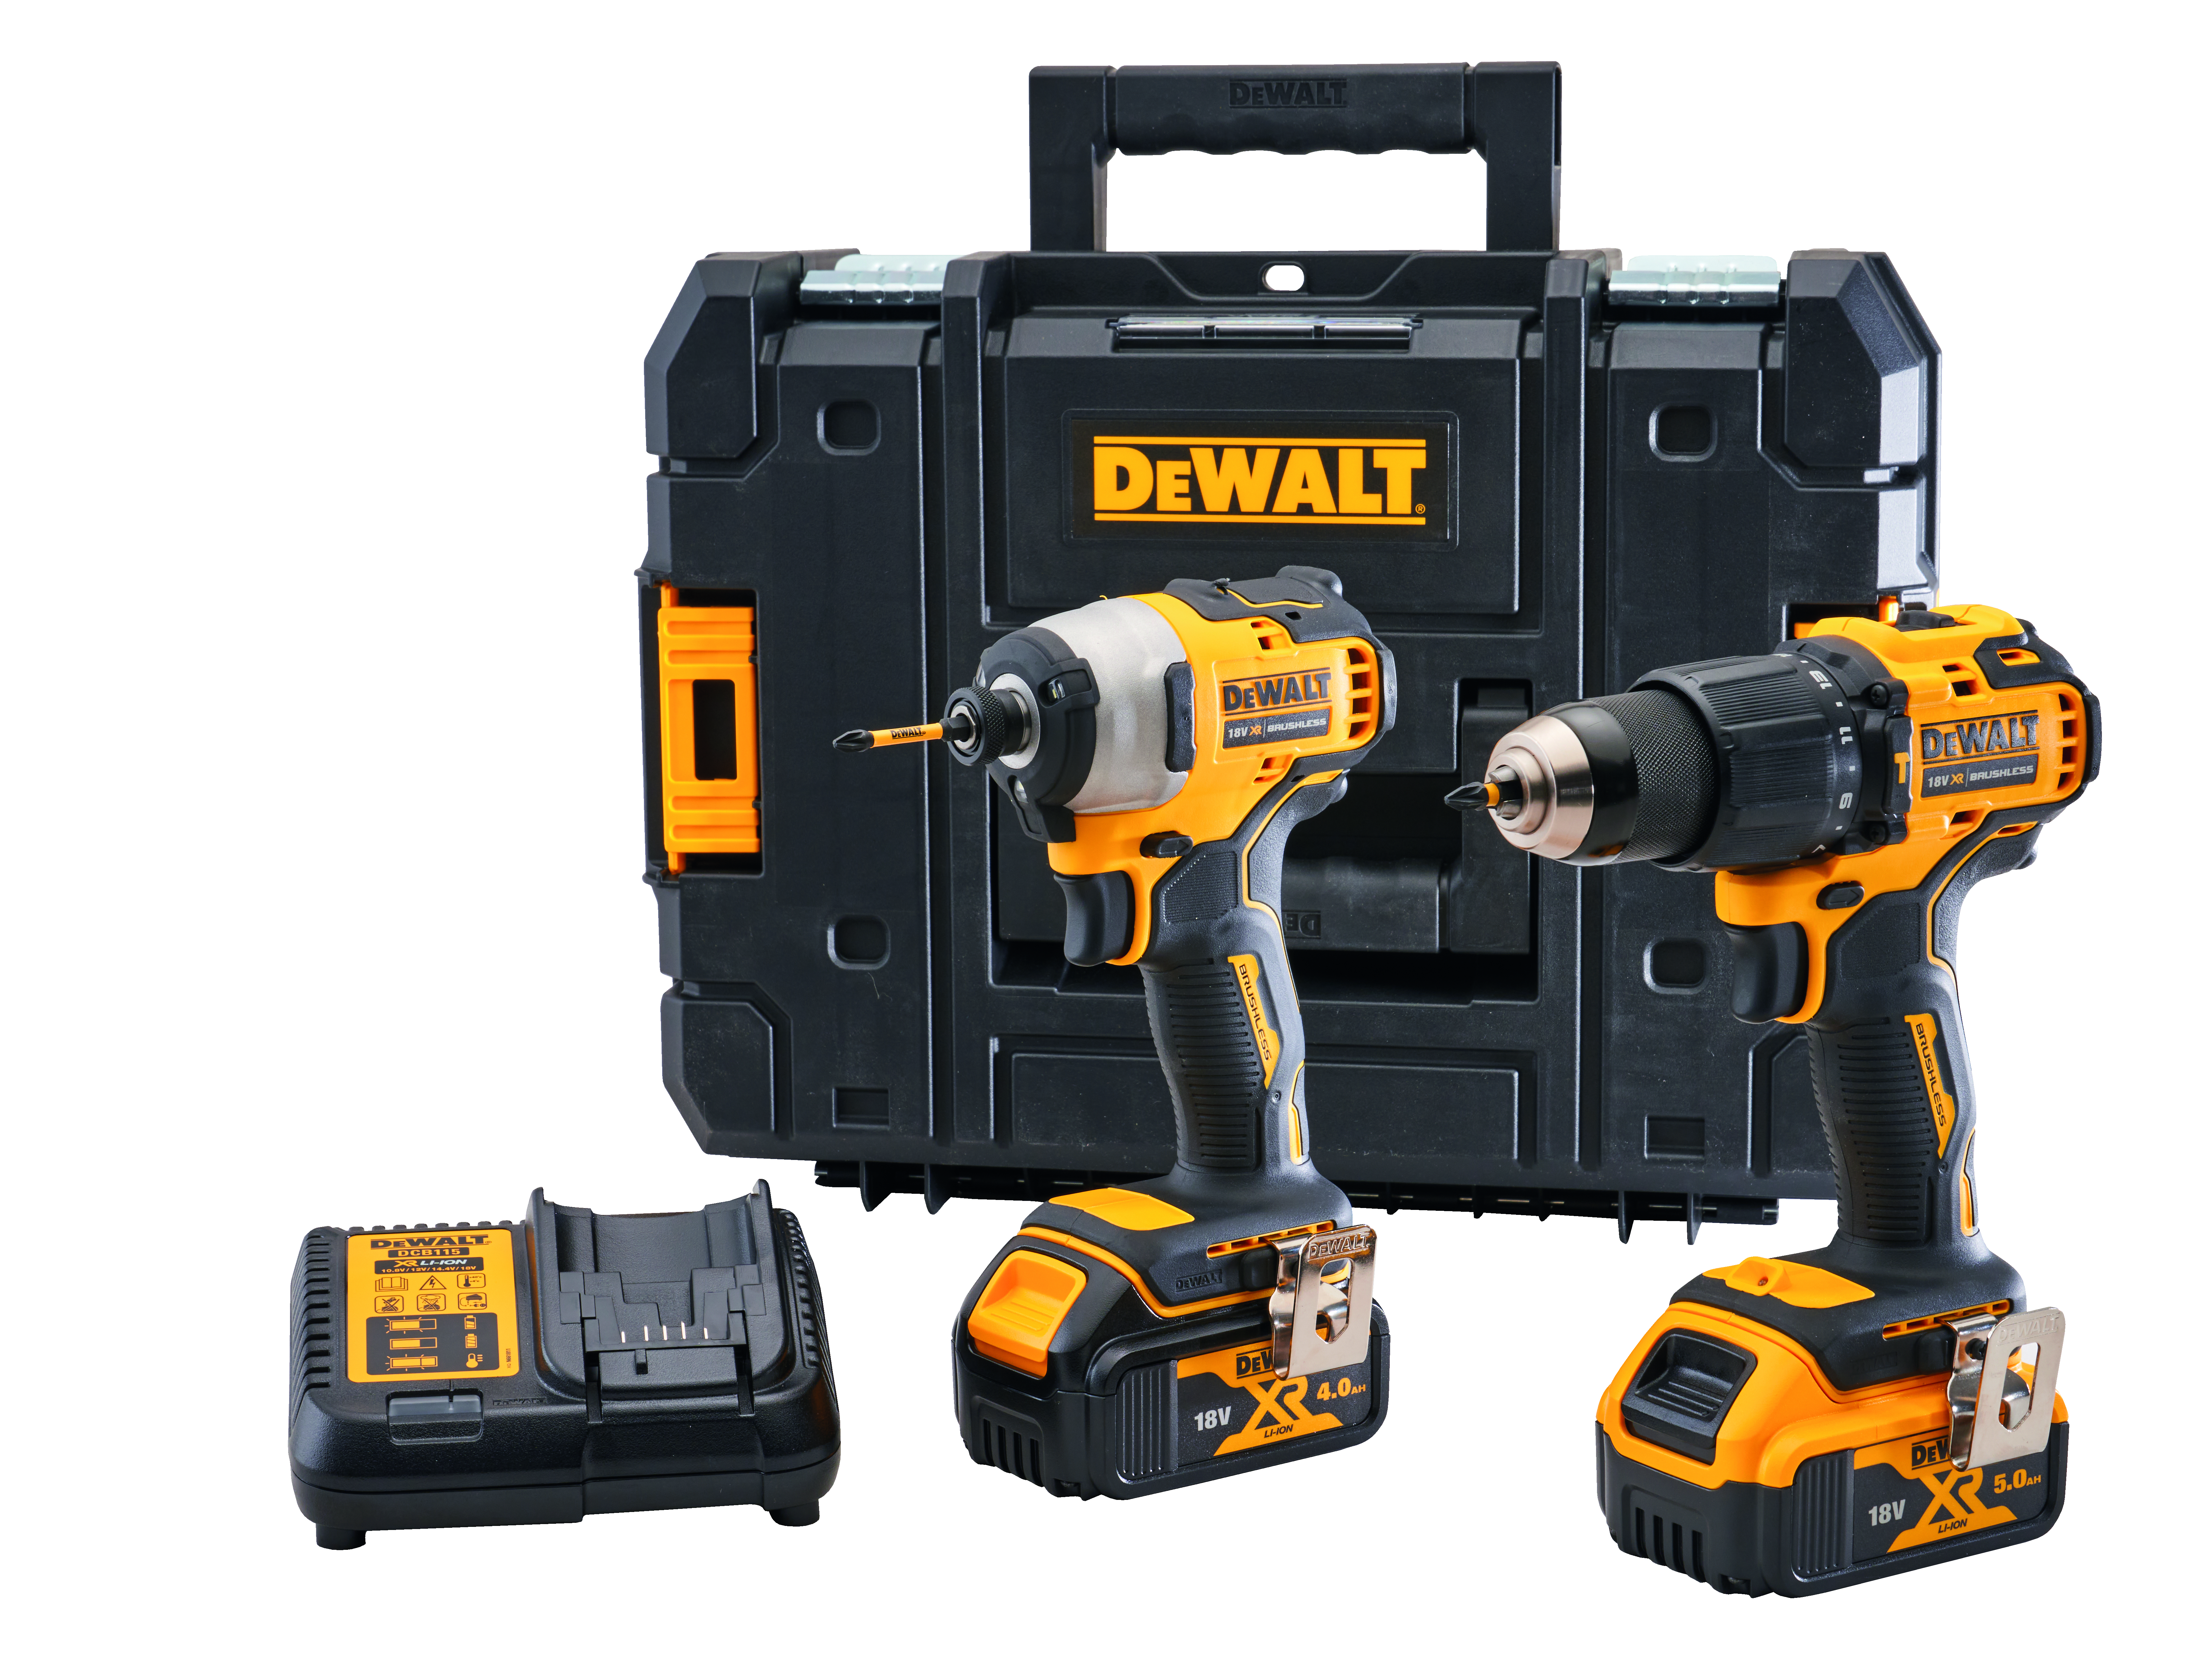 Dewalt Combi Drill & Impact Driver Twin Pack, 1 x 4.0Ah and 1 x 5.0Ah Li-Ion Batteries Included